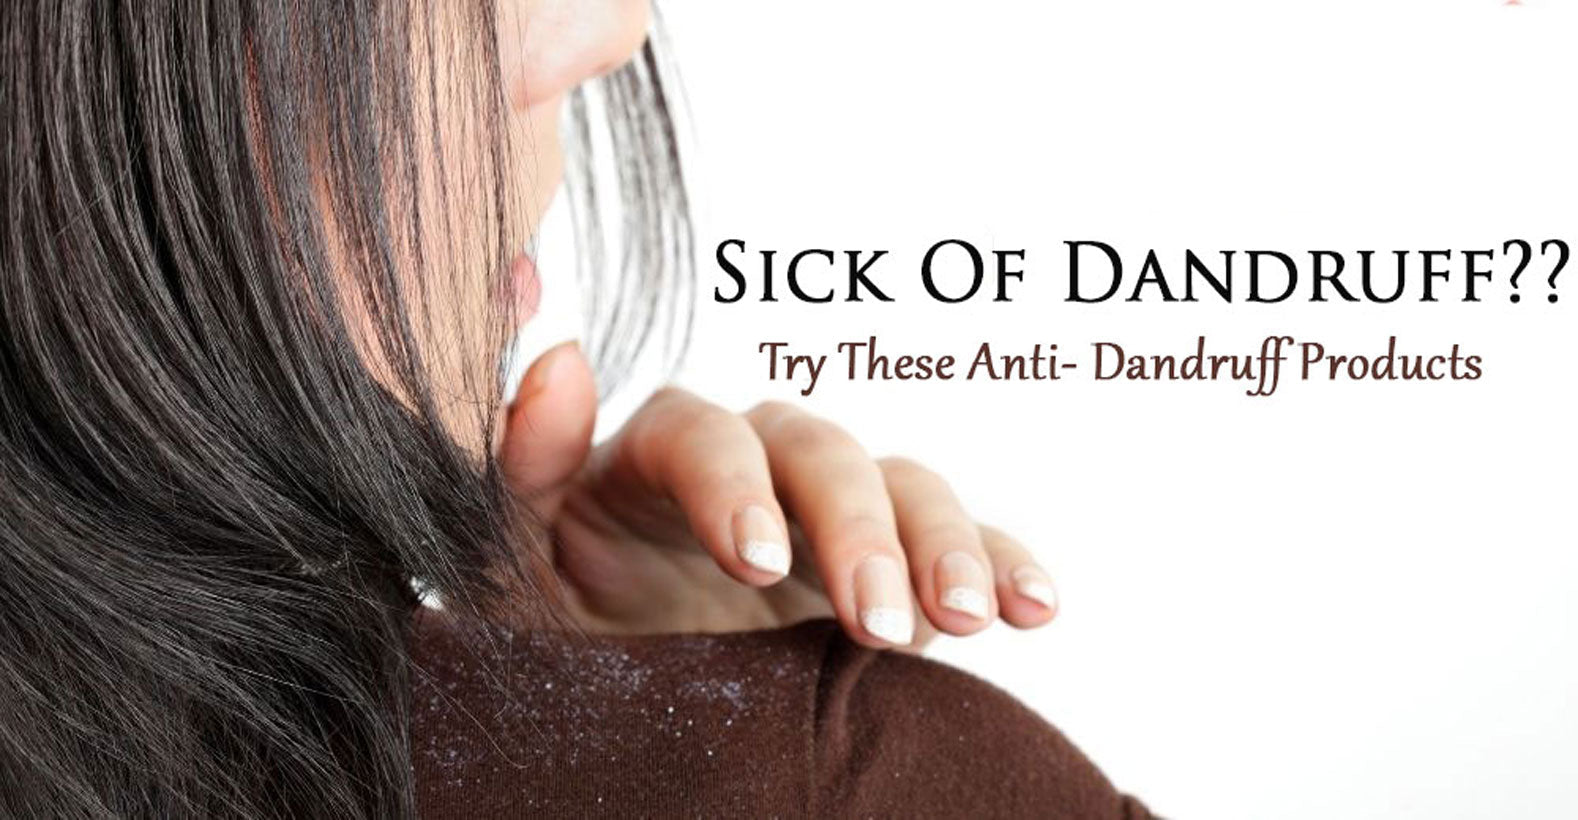 10 Best Anti Dandruff Products To Get Rid of Dandruff